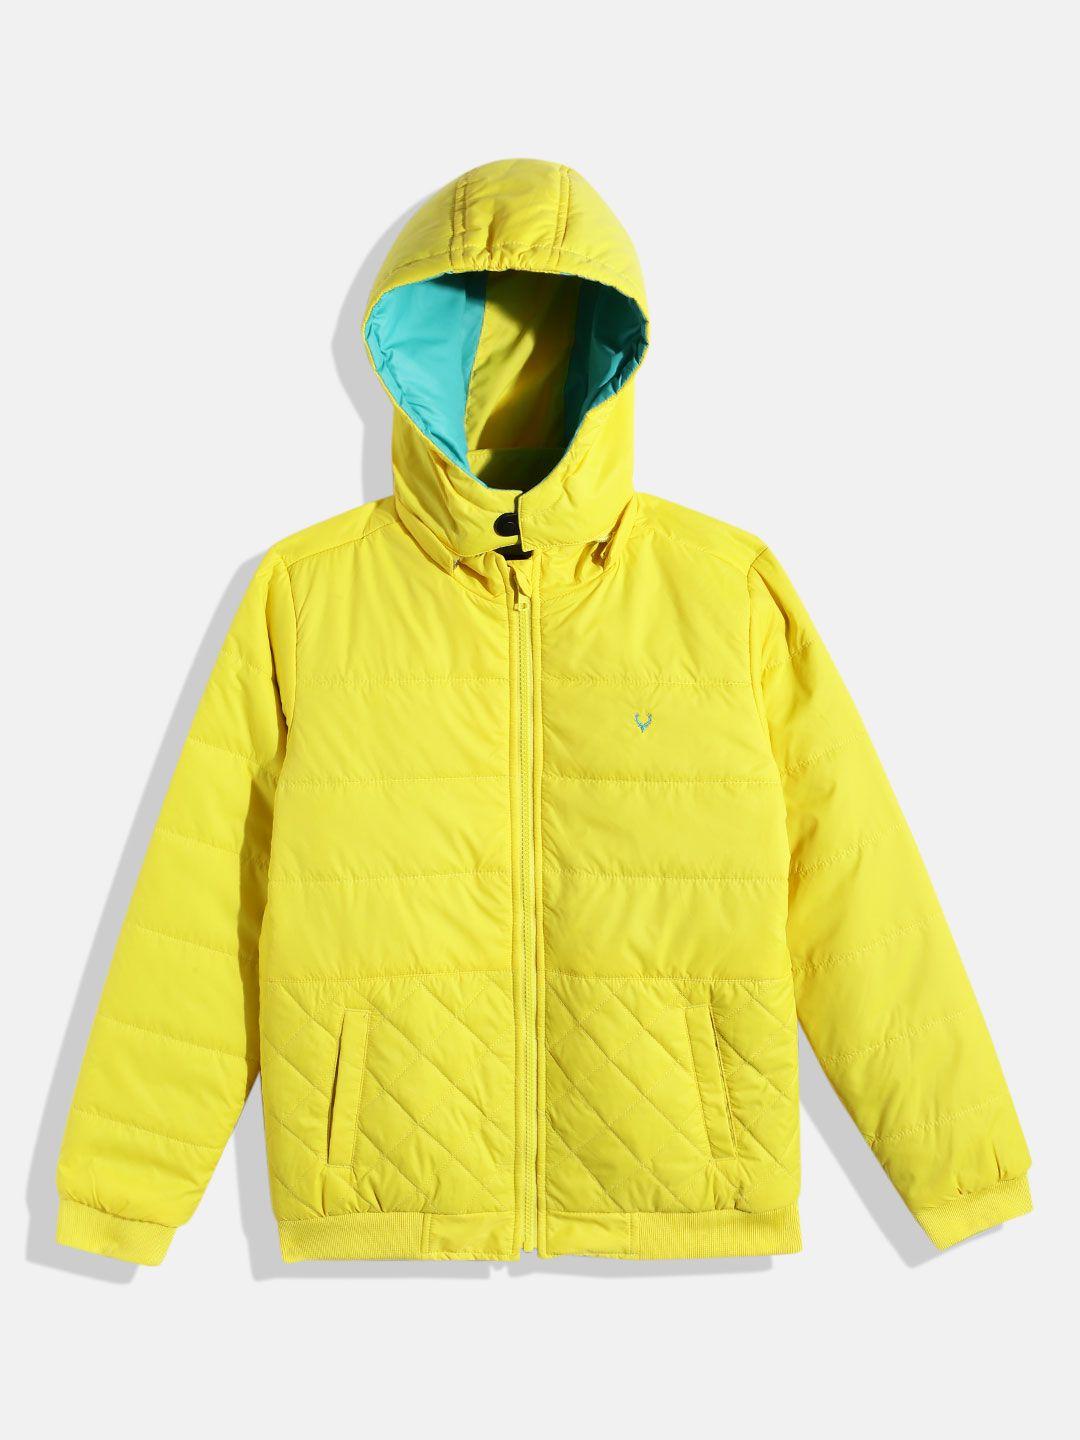 allen solly junior boys yellow solid hooded bomber jacket